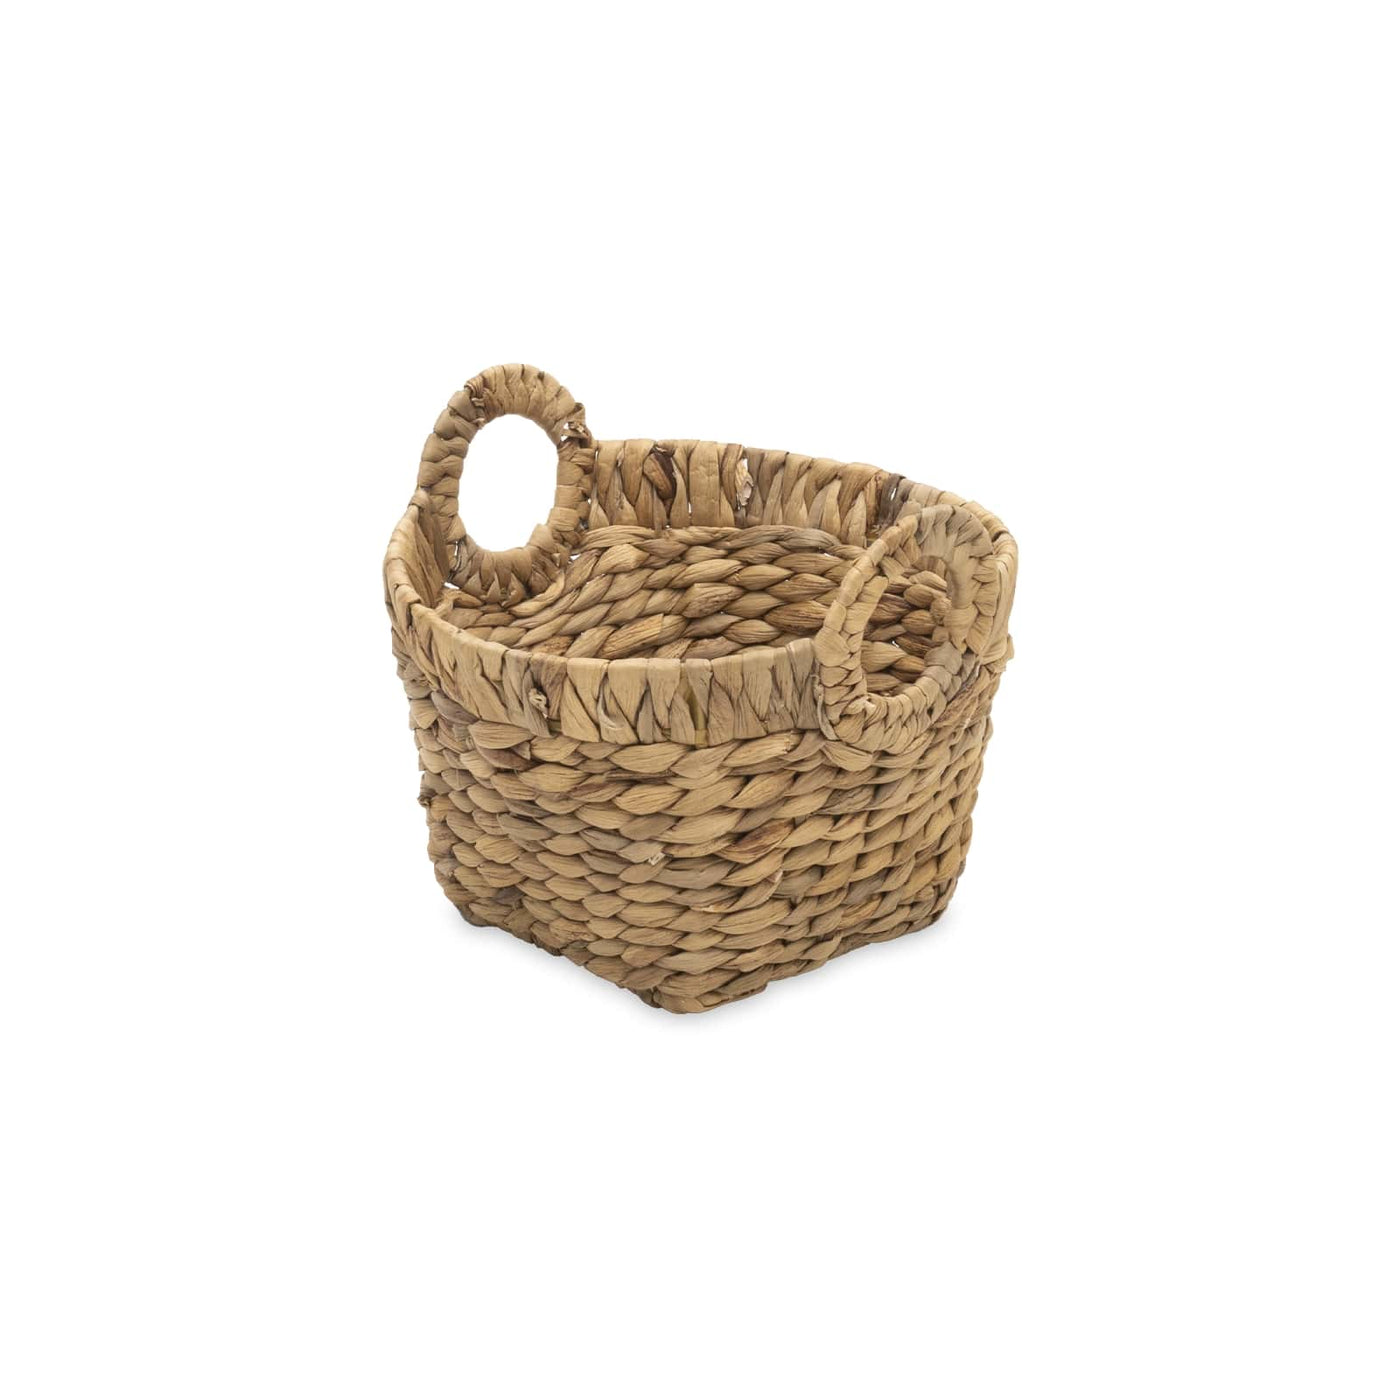 Victoria Water Hyacinth Basket, Natural, S - 2